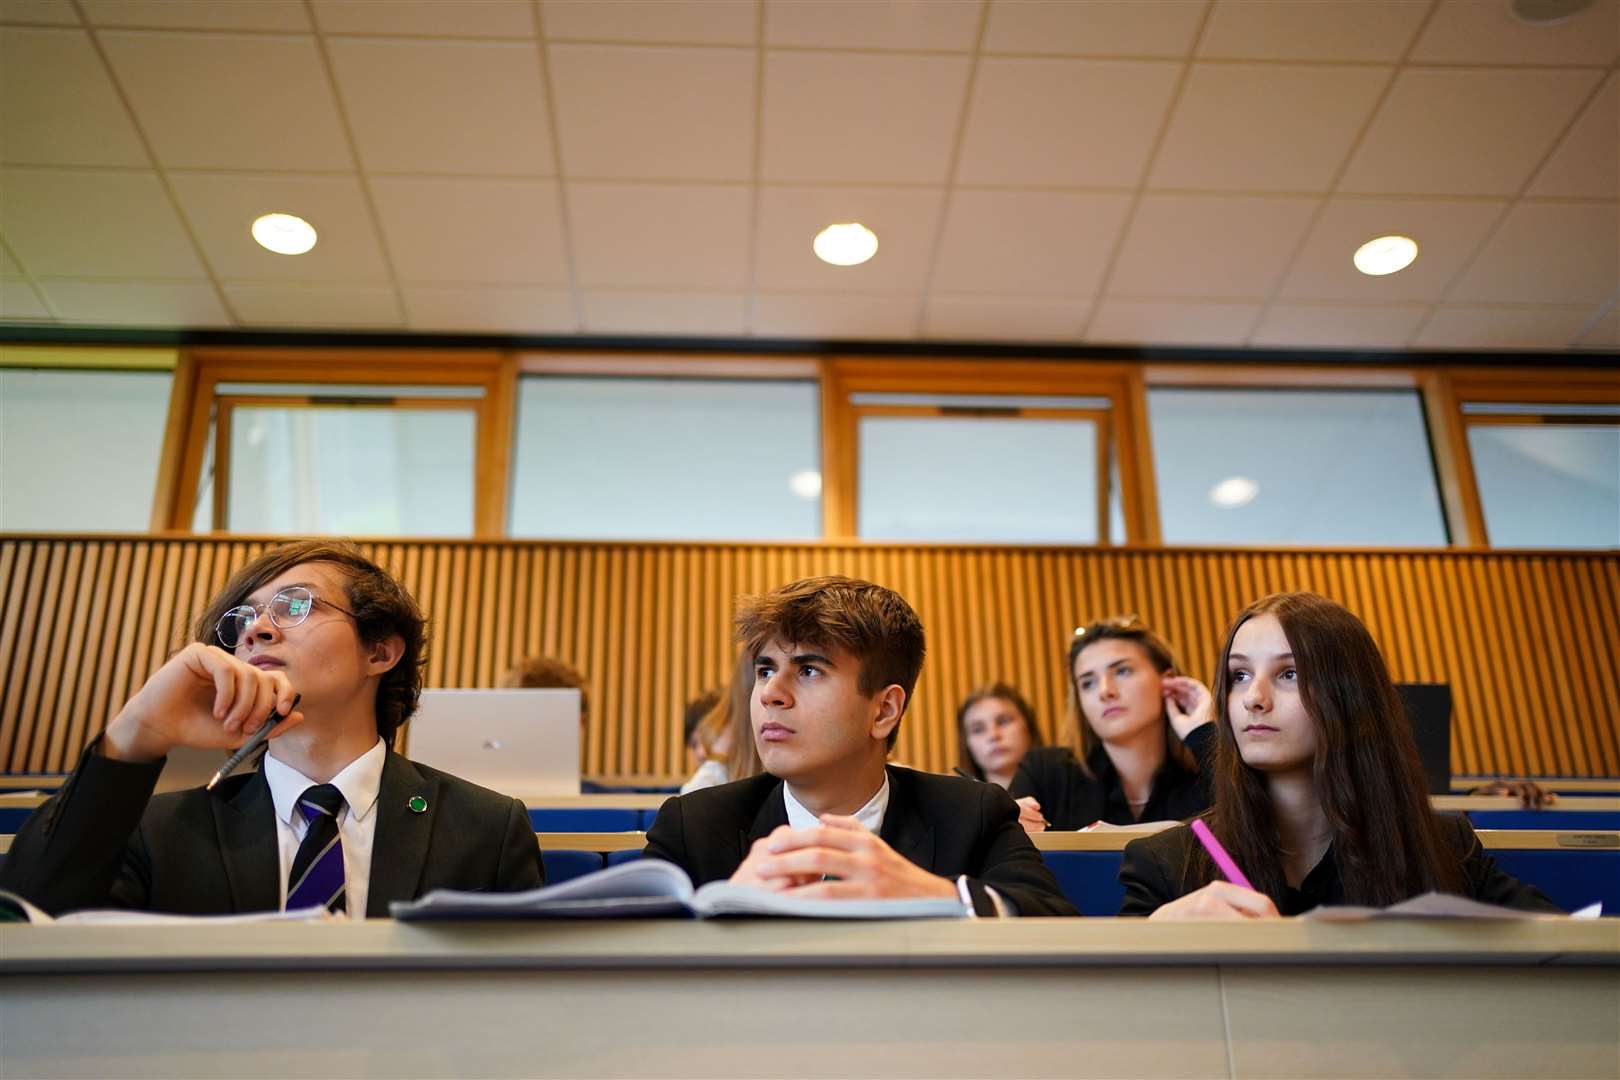 Ukrainian students George Kravetskyi, Maryan Prydatko and Valeria Khrystiuk in class at Wrekin College in Telford, Shropshire (Jacob King/PA)